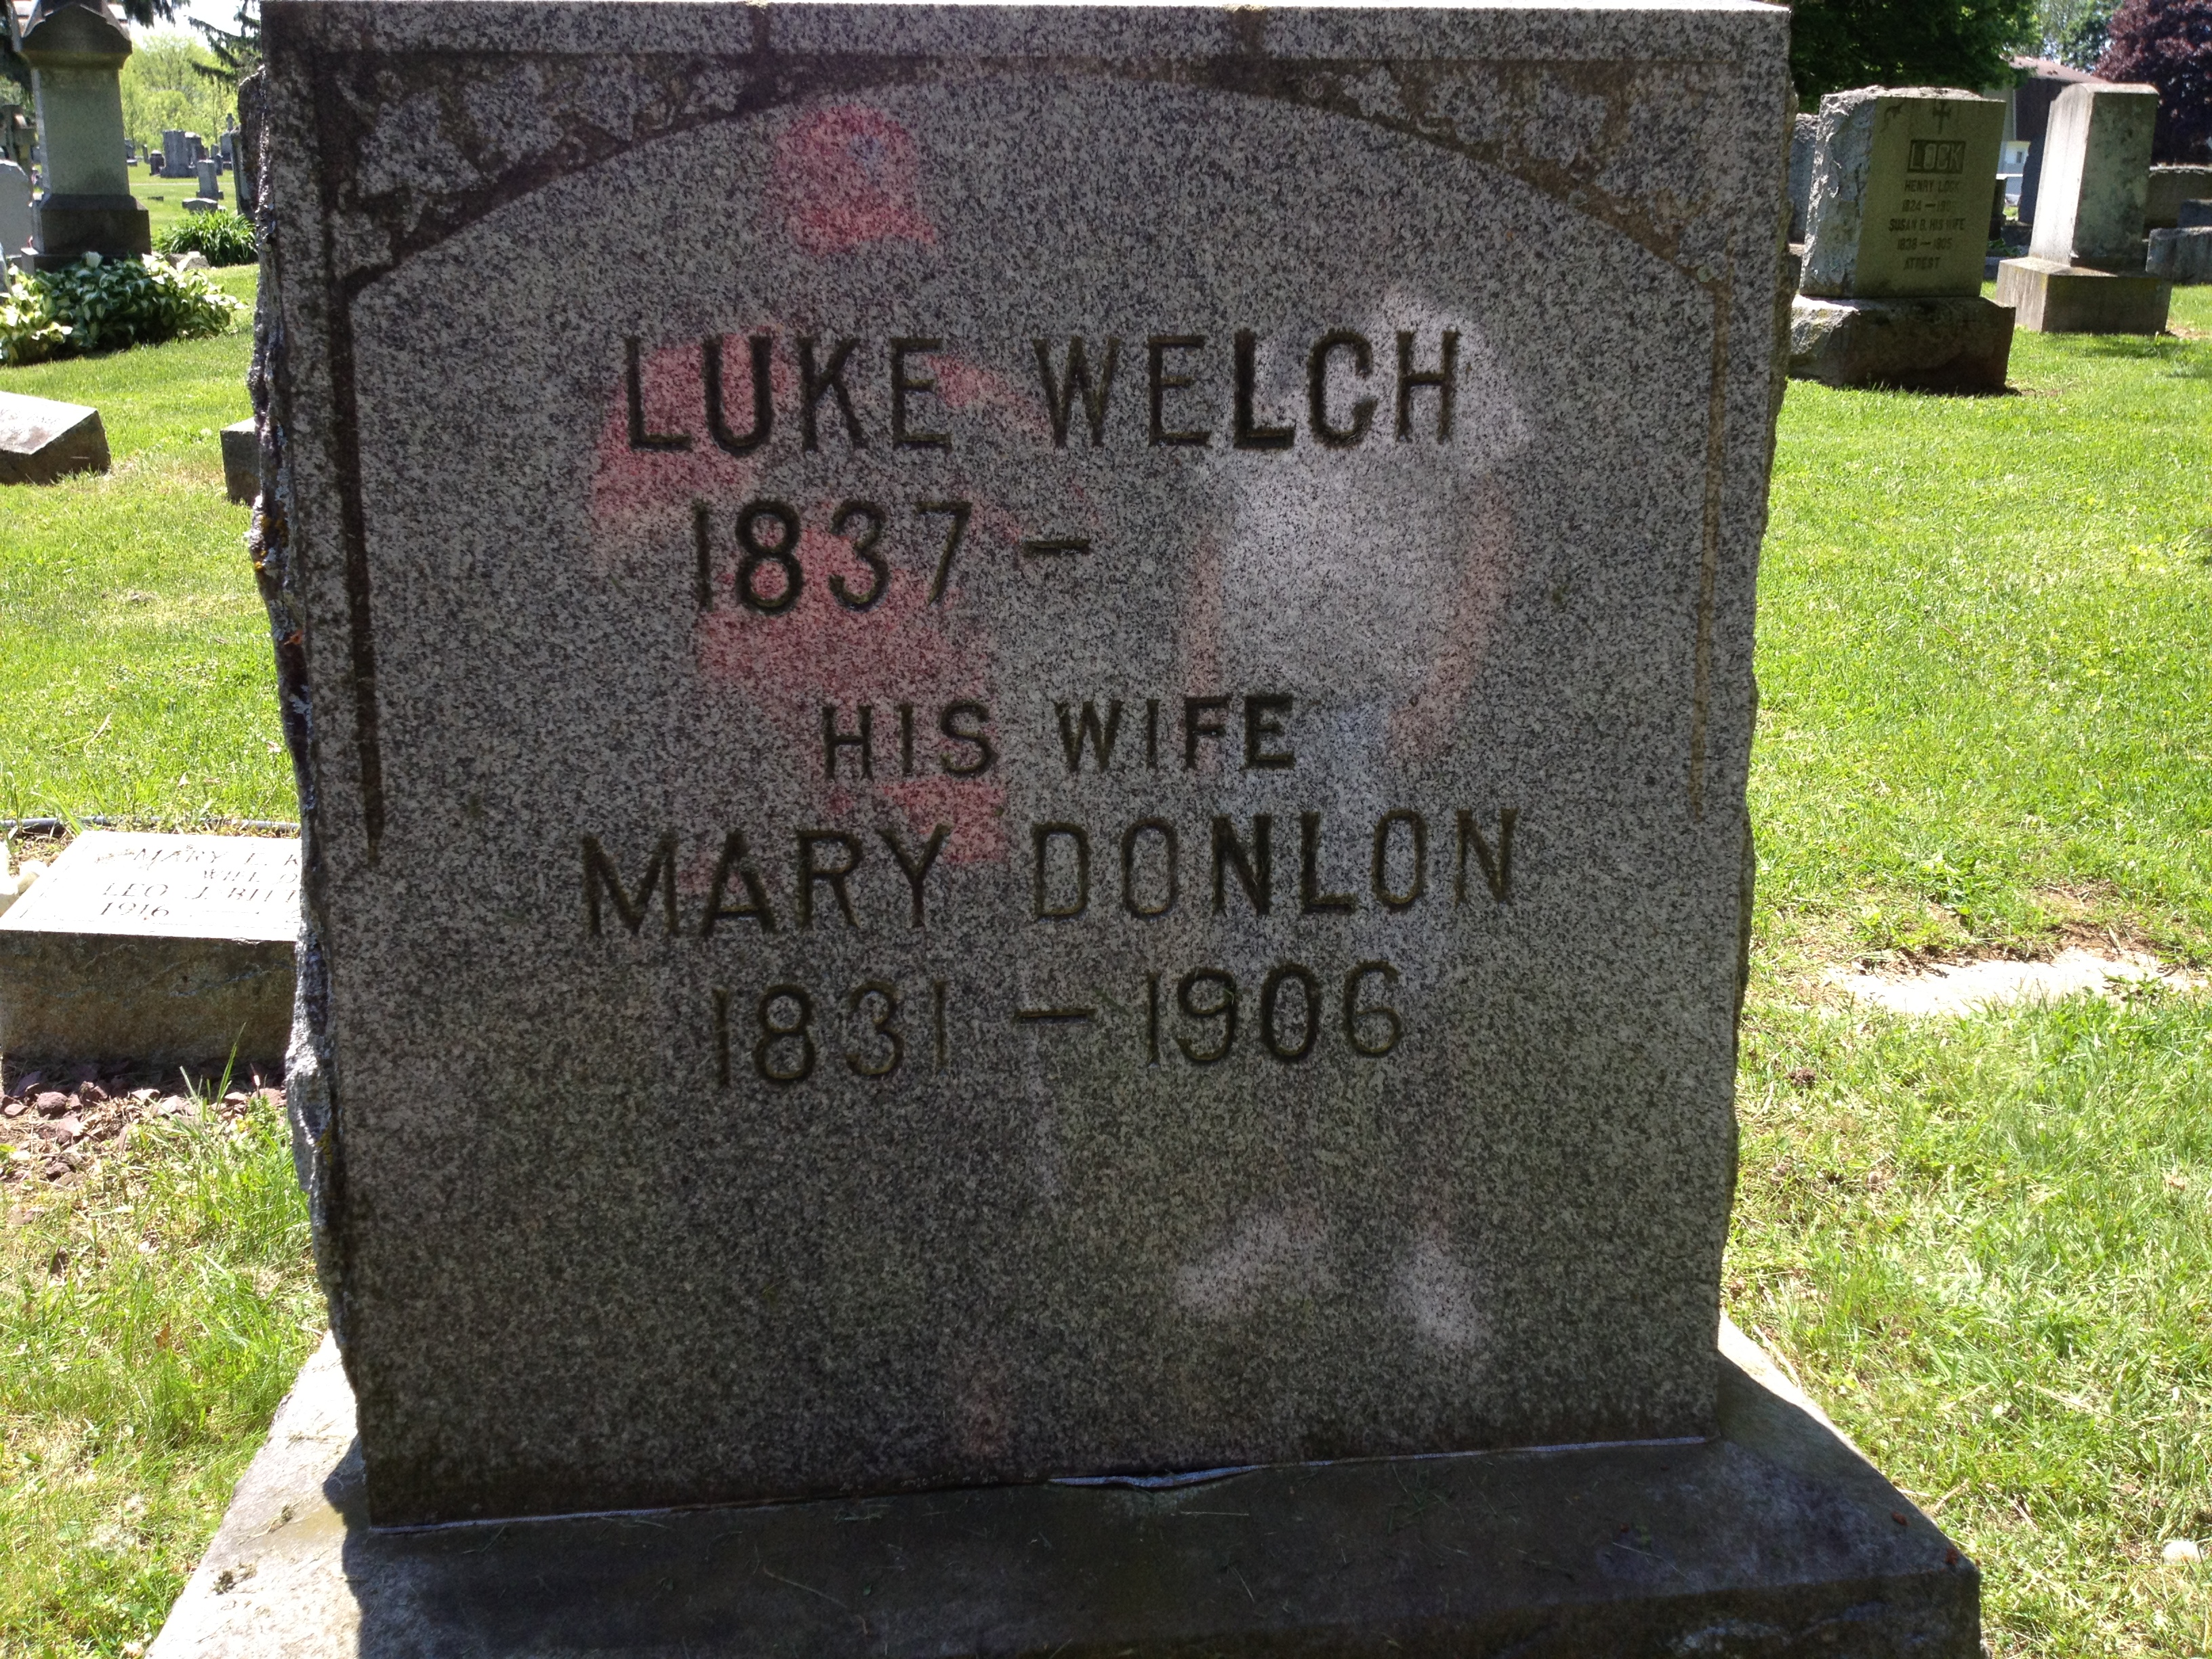 Headstone of Luke Welch and Mary Donlon